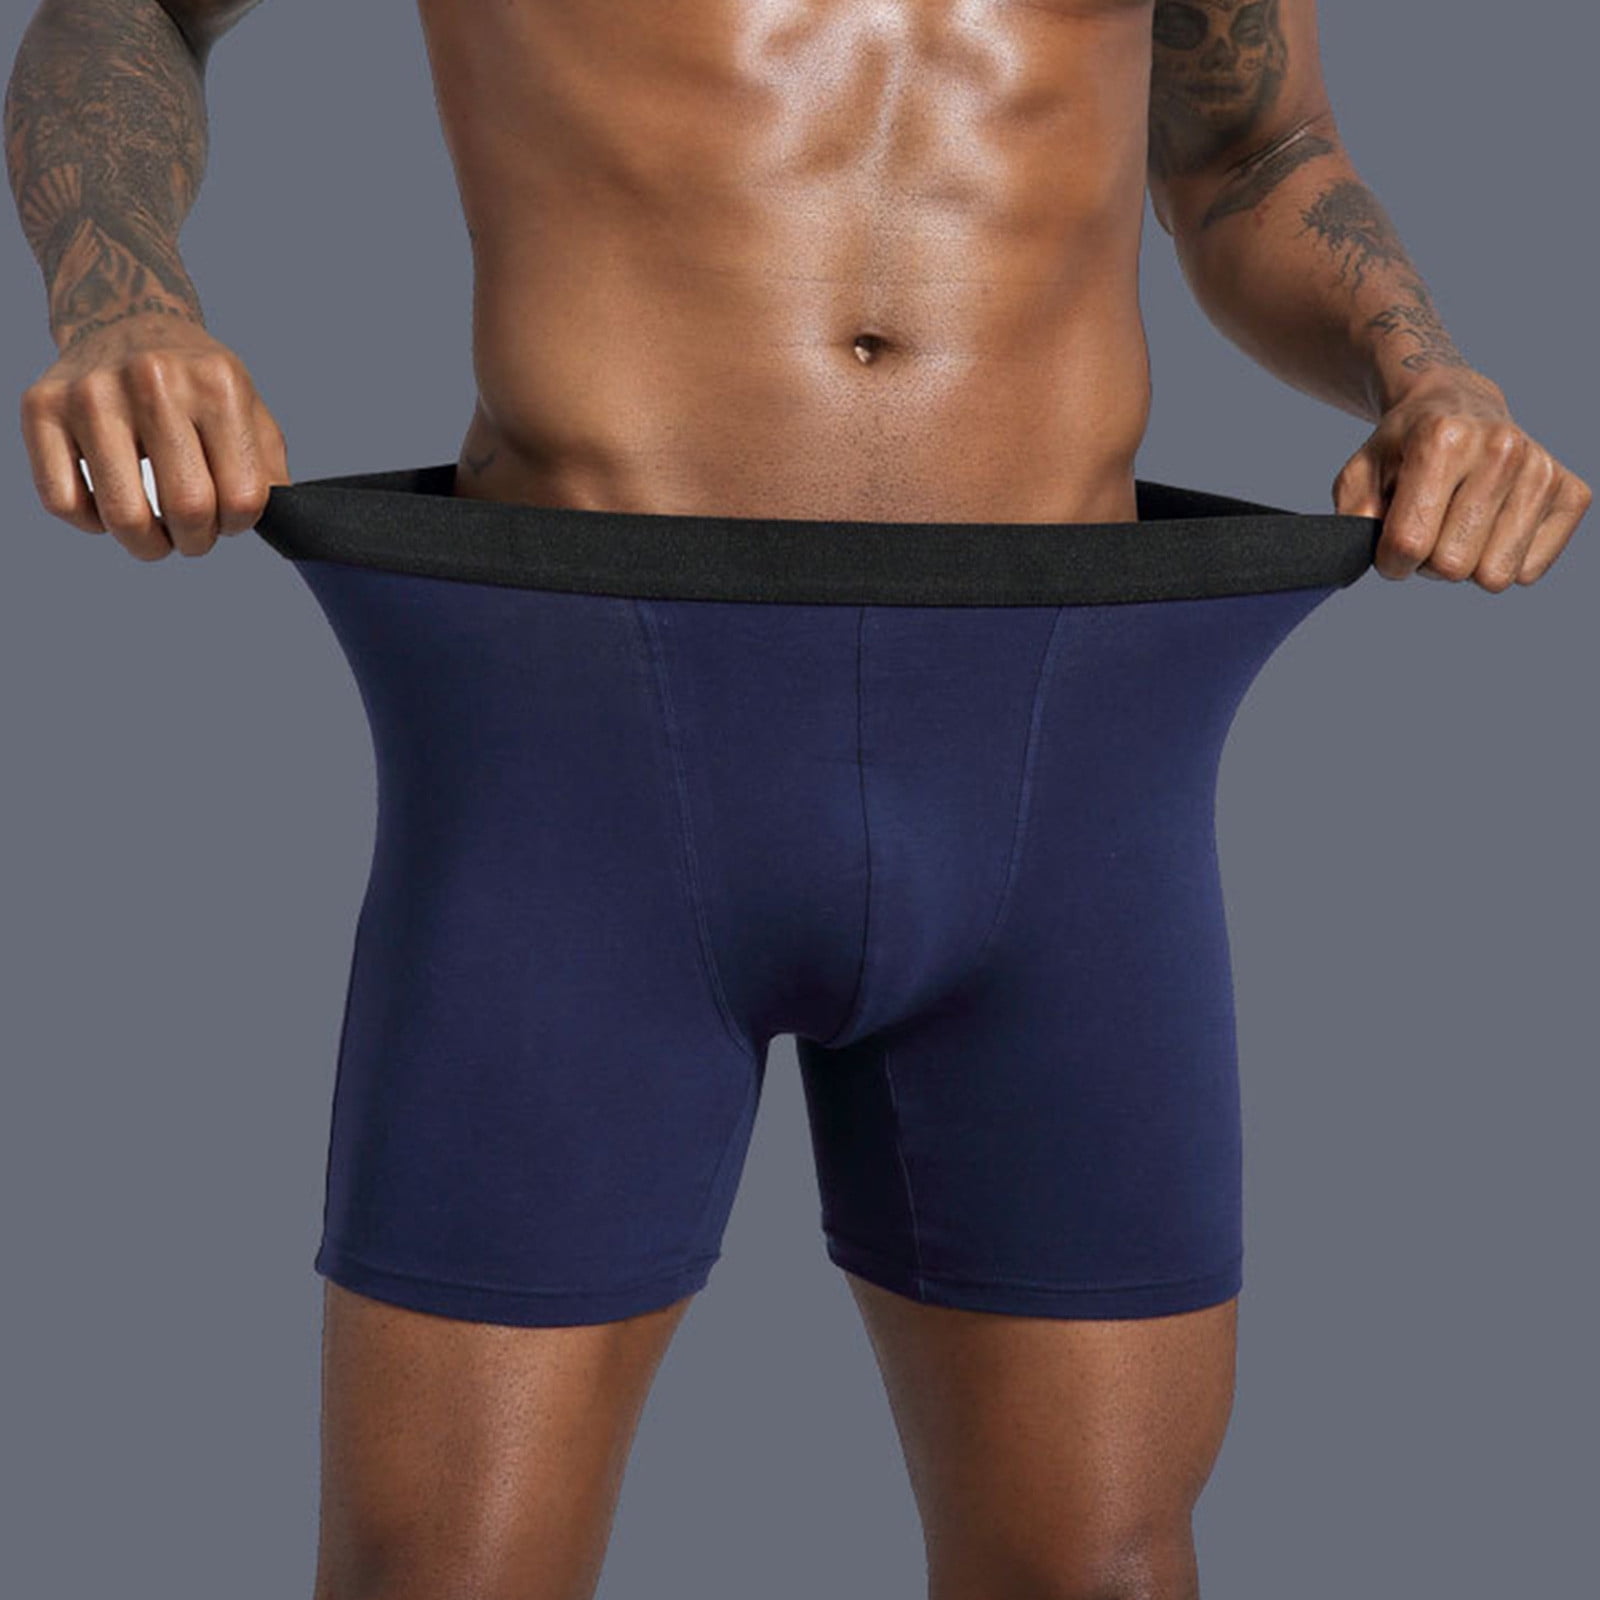 MaFYtyTPR Men's Boxer Briefs Big & Tall Sizes Clearance Men's Underwear  Cotton Large Size Men's Boxer Underpants Extra Long Sport Solid Color 